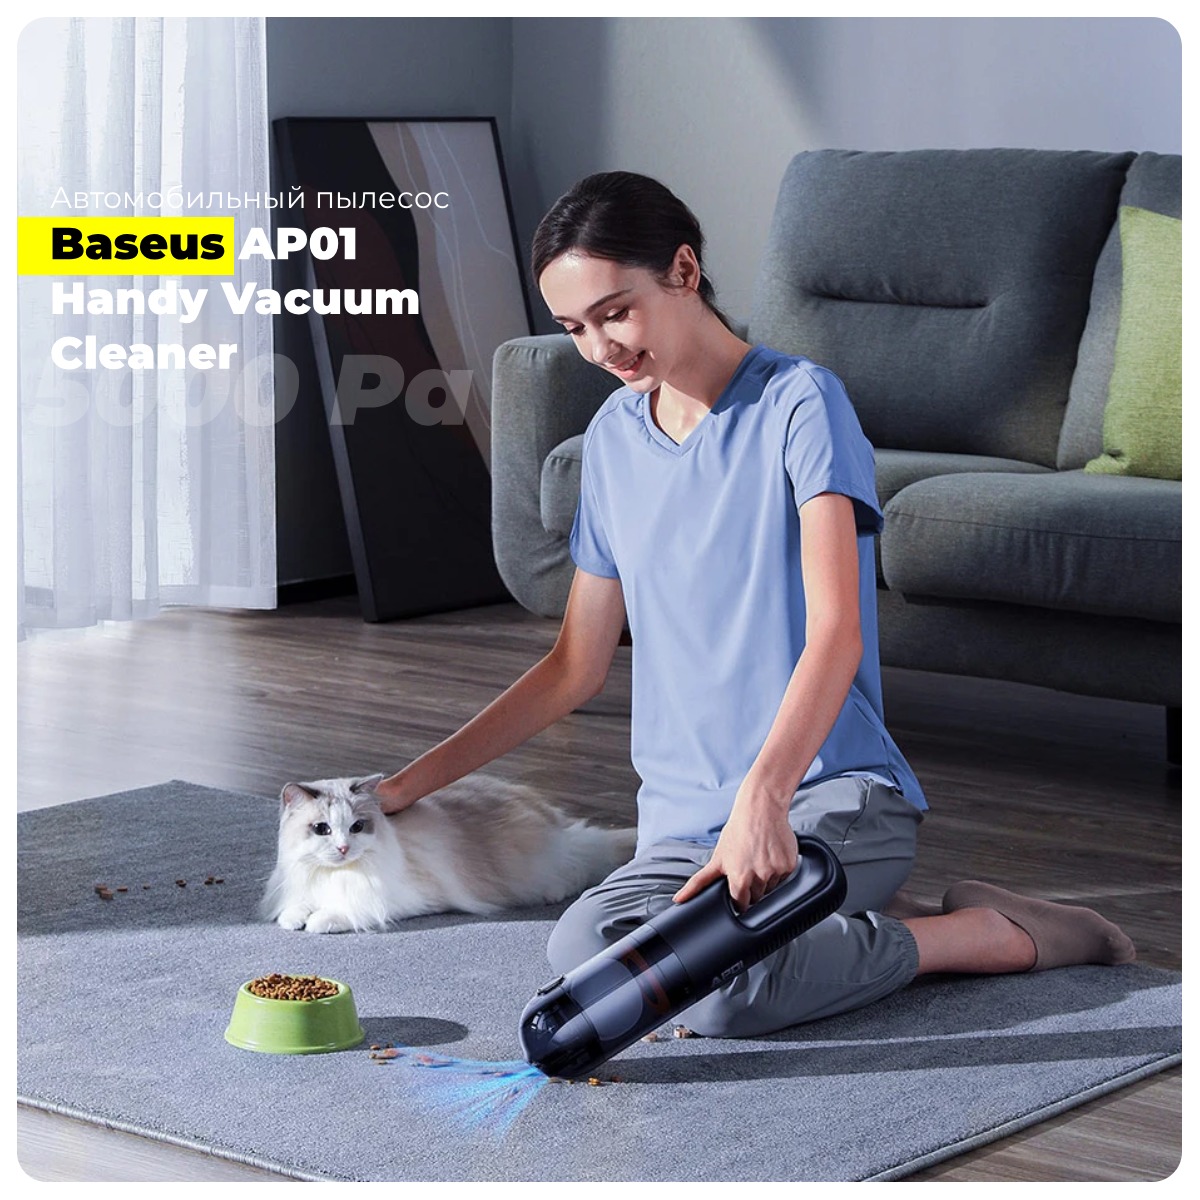 Baseus-AP01-Handy-Vacuum-Cleaner-01